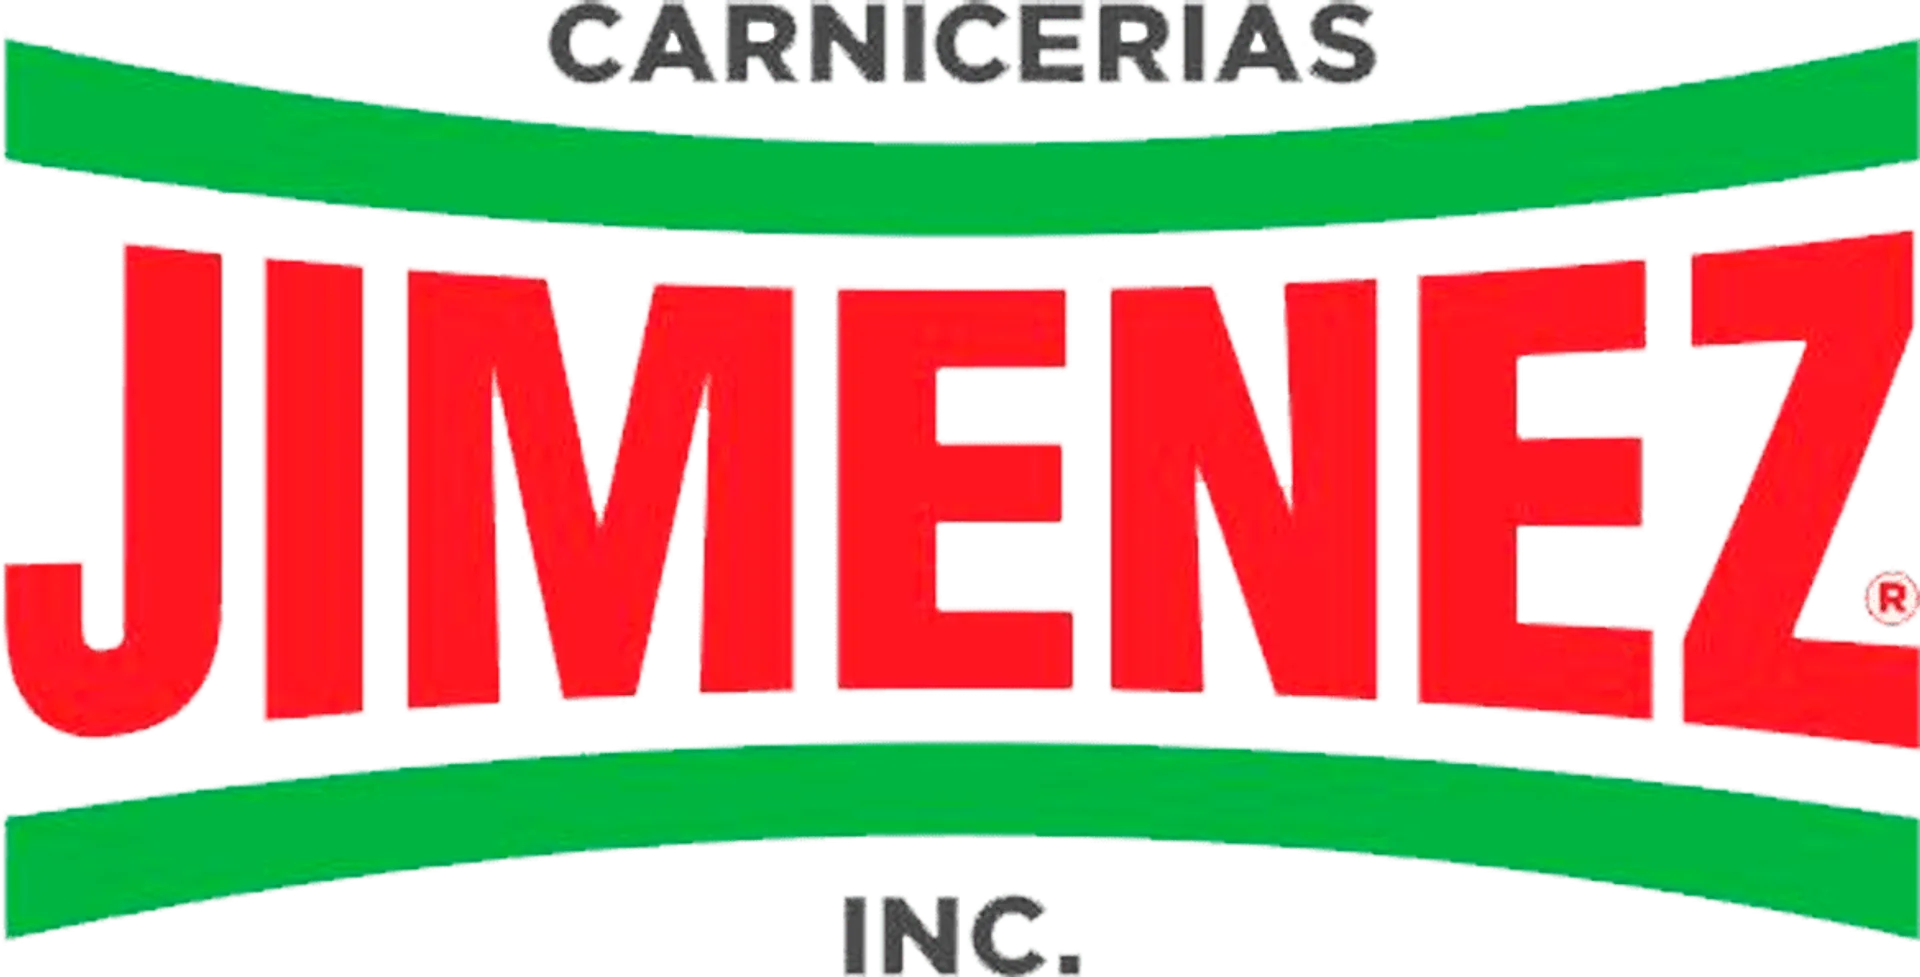 CARNICERIAS JIMENEZ logo. Current weekly ad